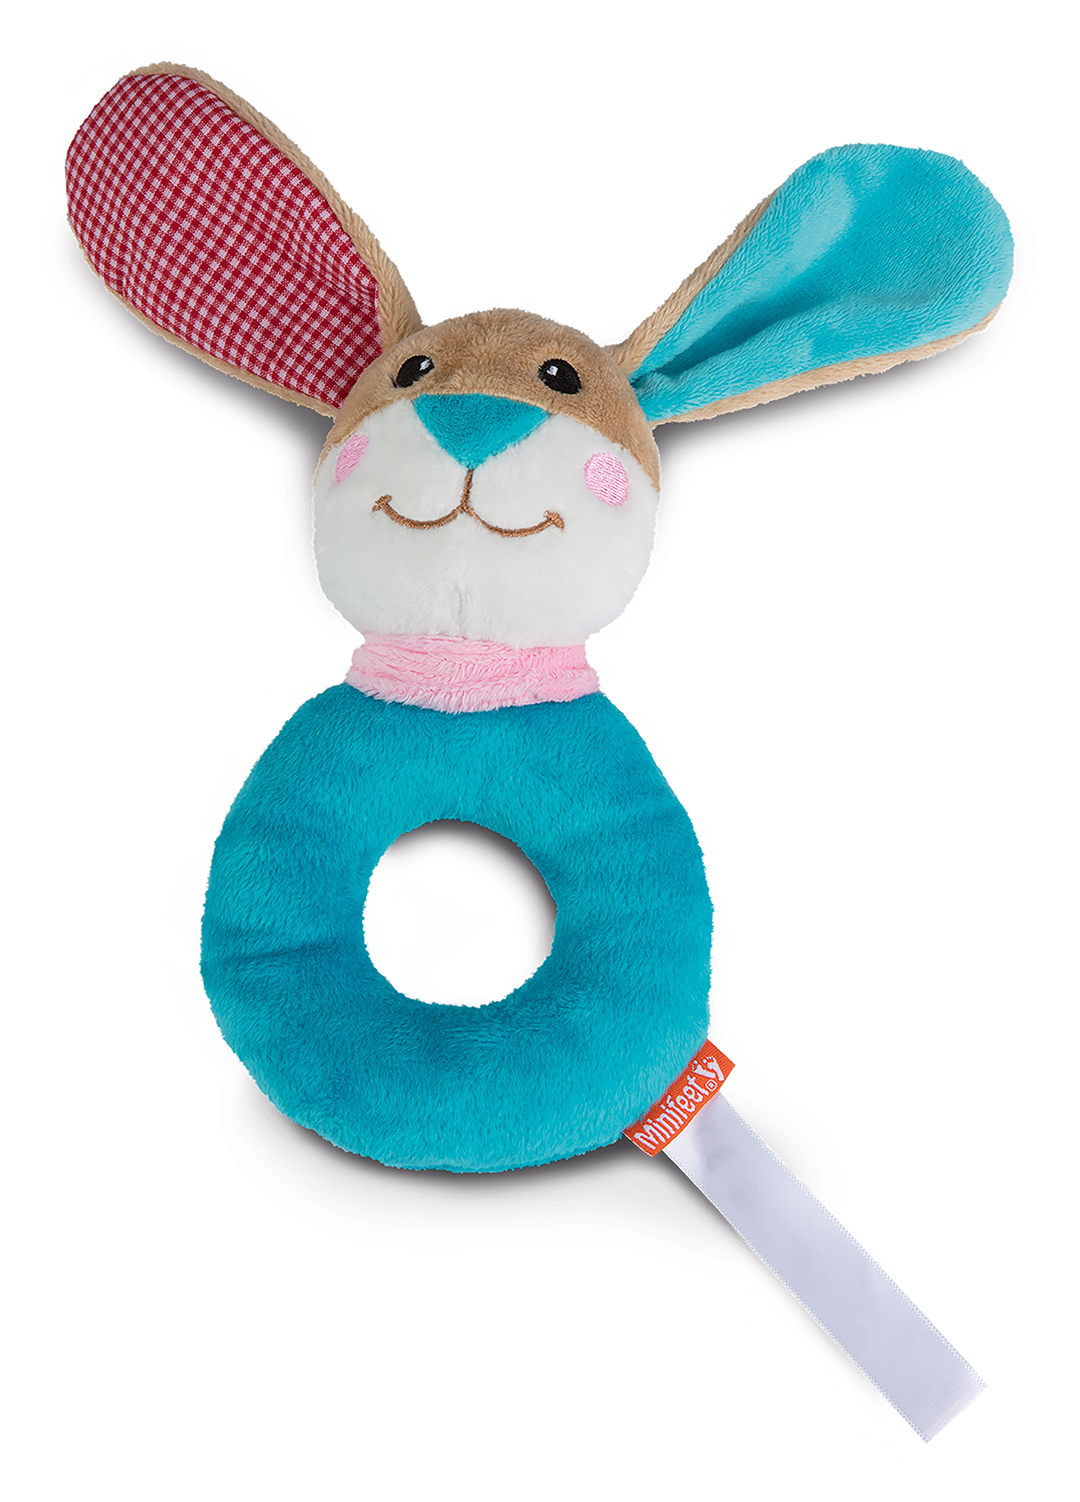 grasp toy rabbit with rattle, round